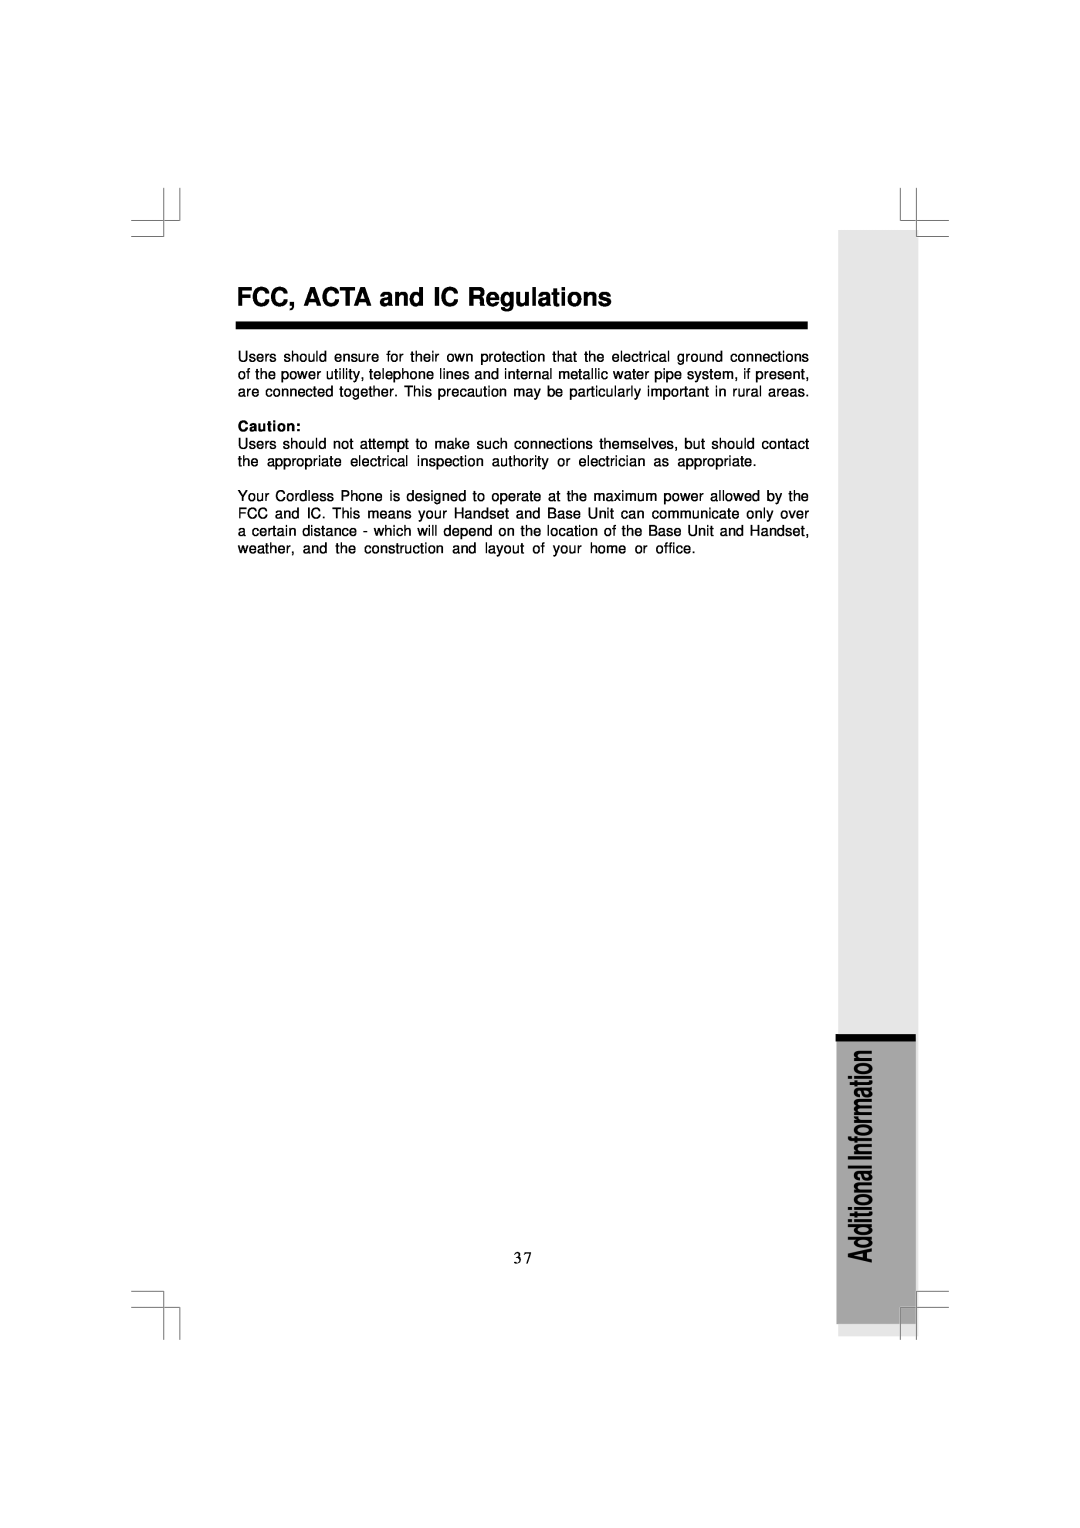 VTech I5867, I5866 user manual FCC, ACTA and IC Regulations, Additional Information 